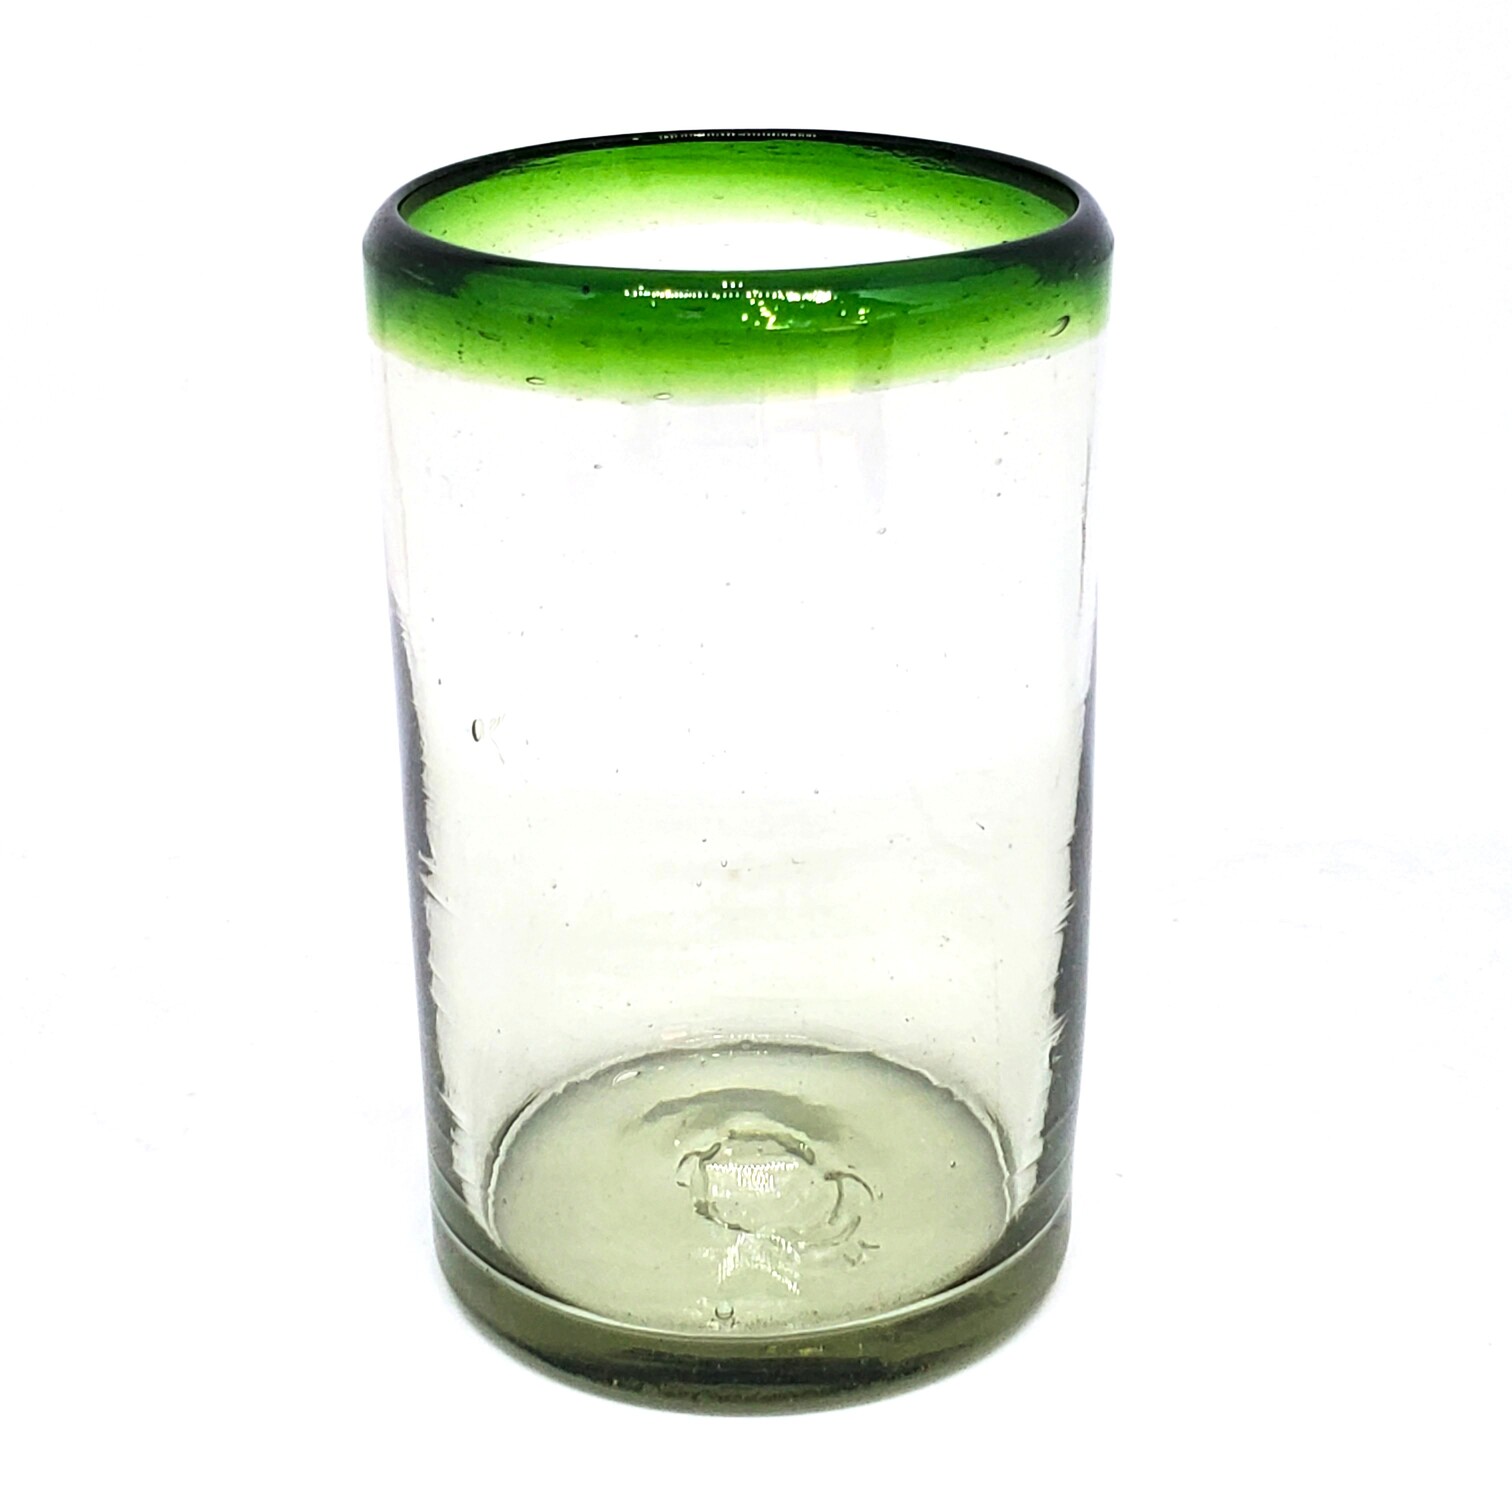 Emerald Green Rim 14 oz Drinking Glasses (set of 6)